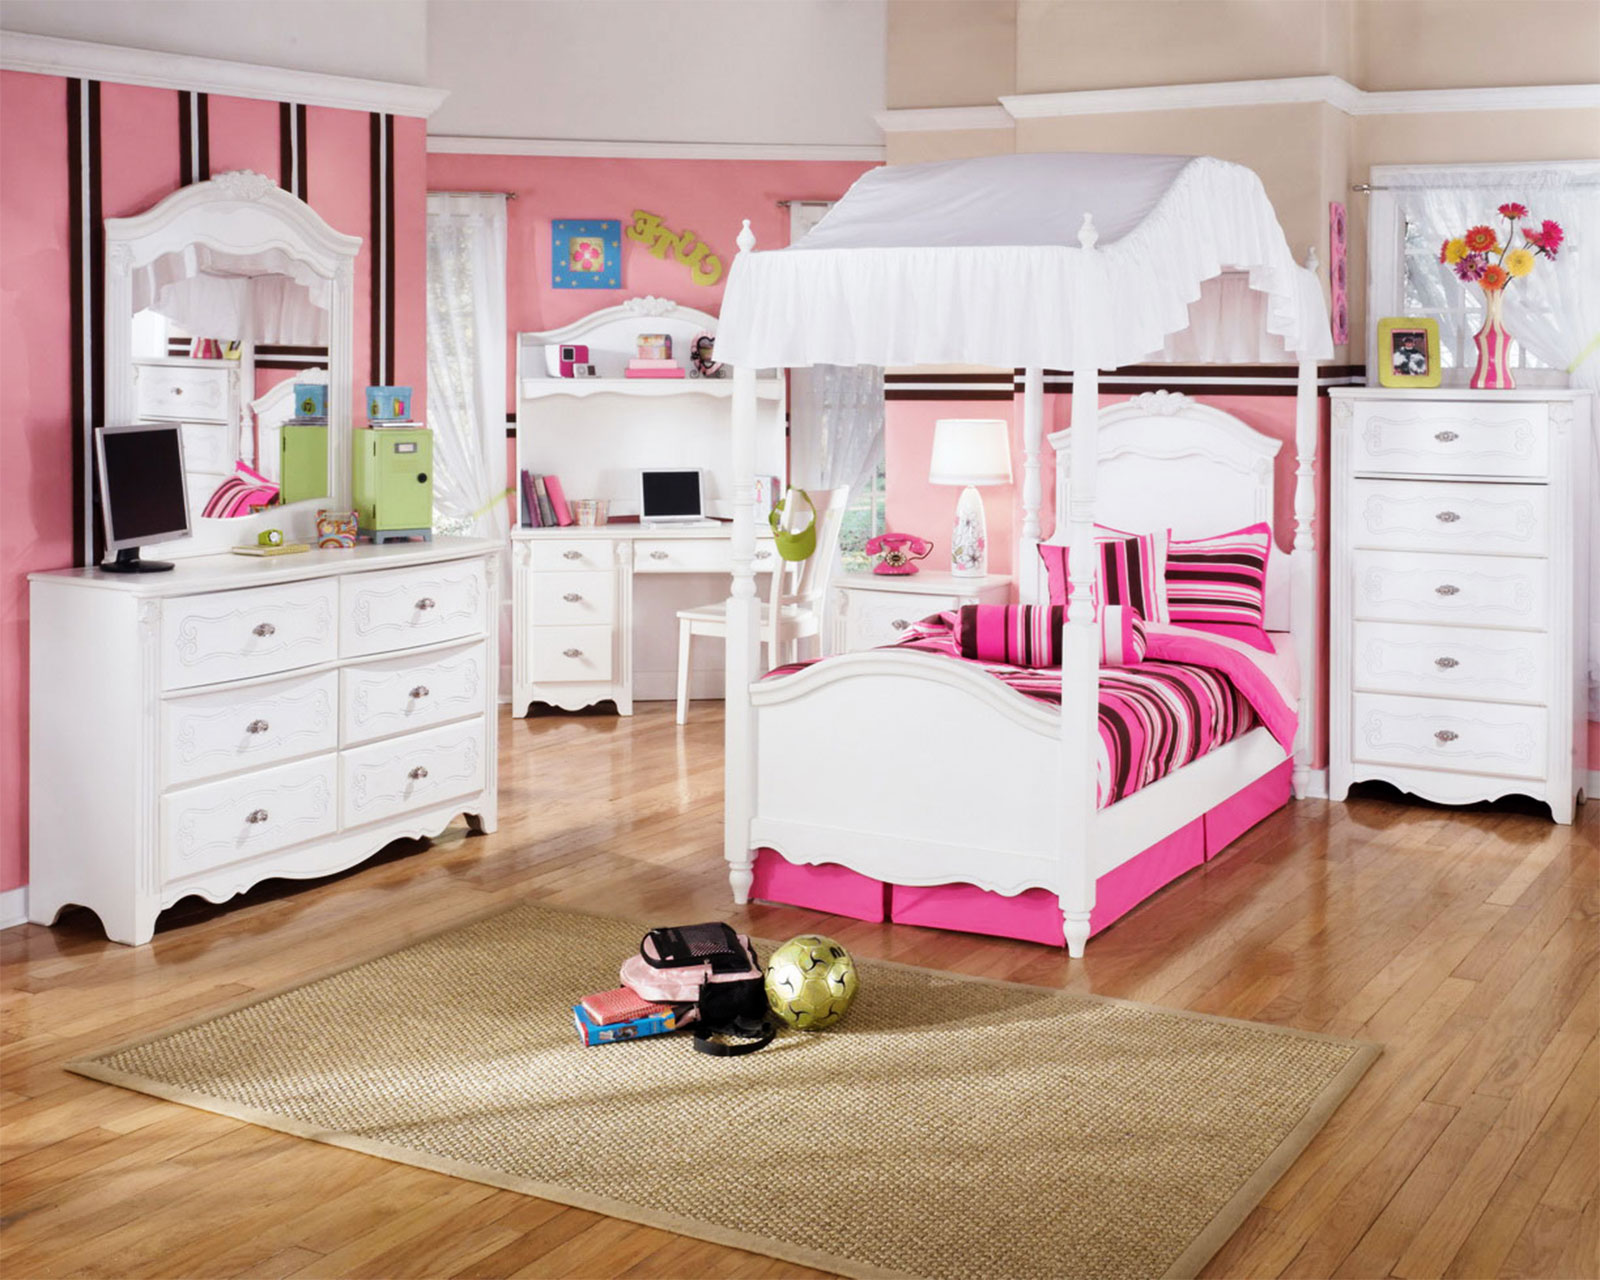 kids bedroom furniture girls : Furniture Ideas ...